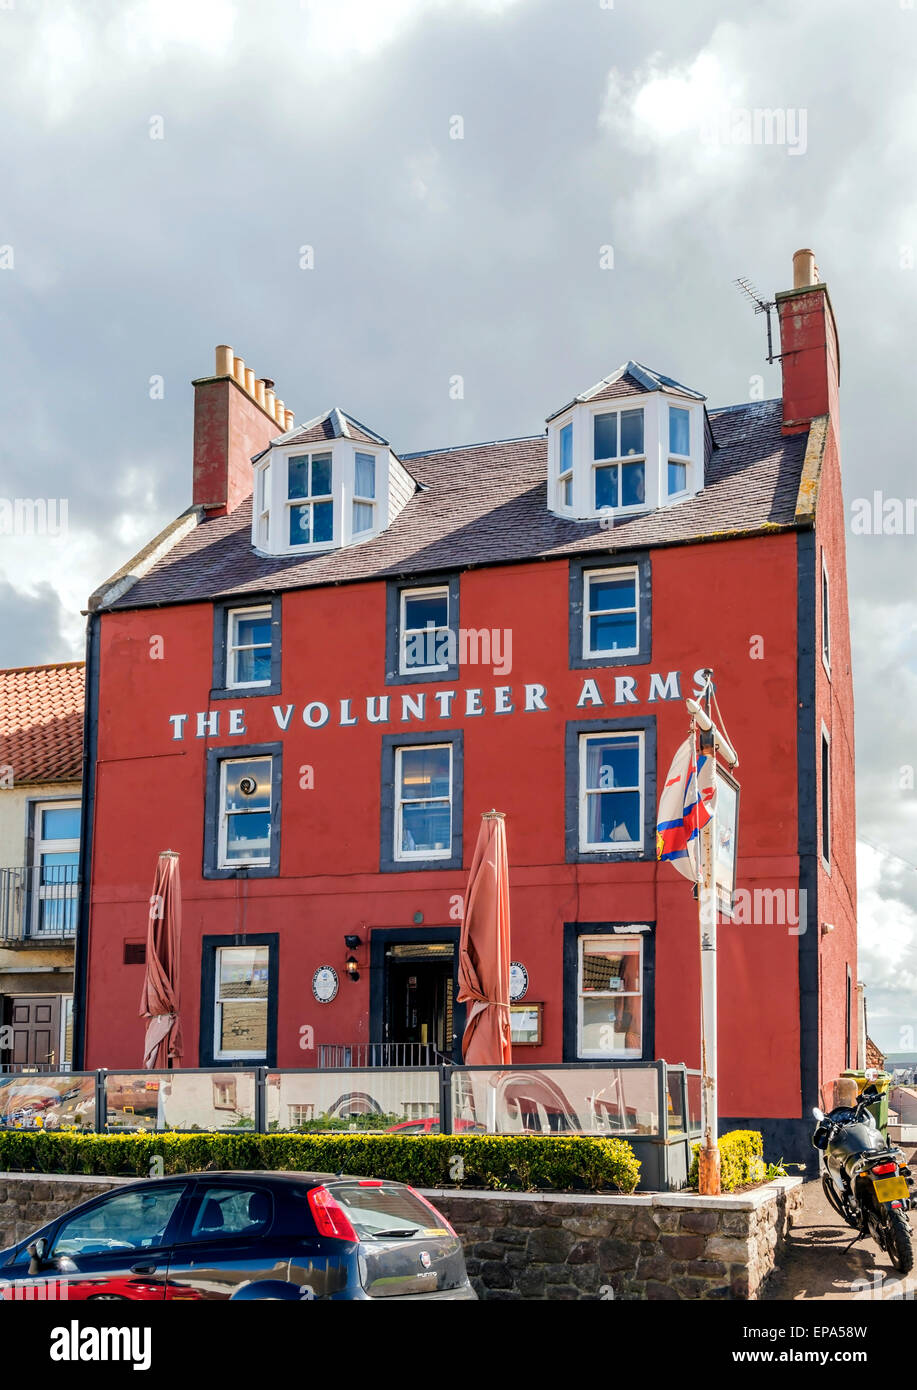 The Volunteer Arms public house pub near the harbour in Dunbar, East Lothian, Scotland. Stock Photo